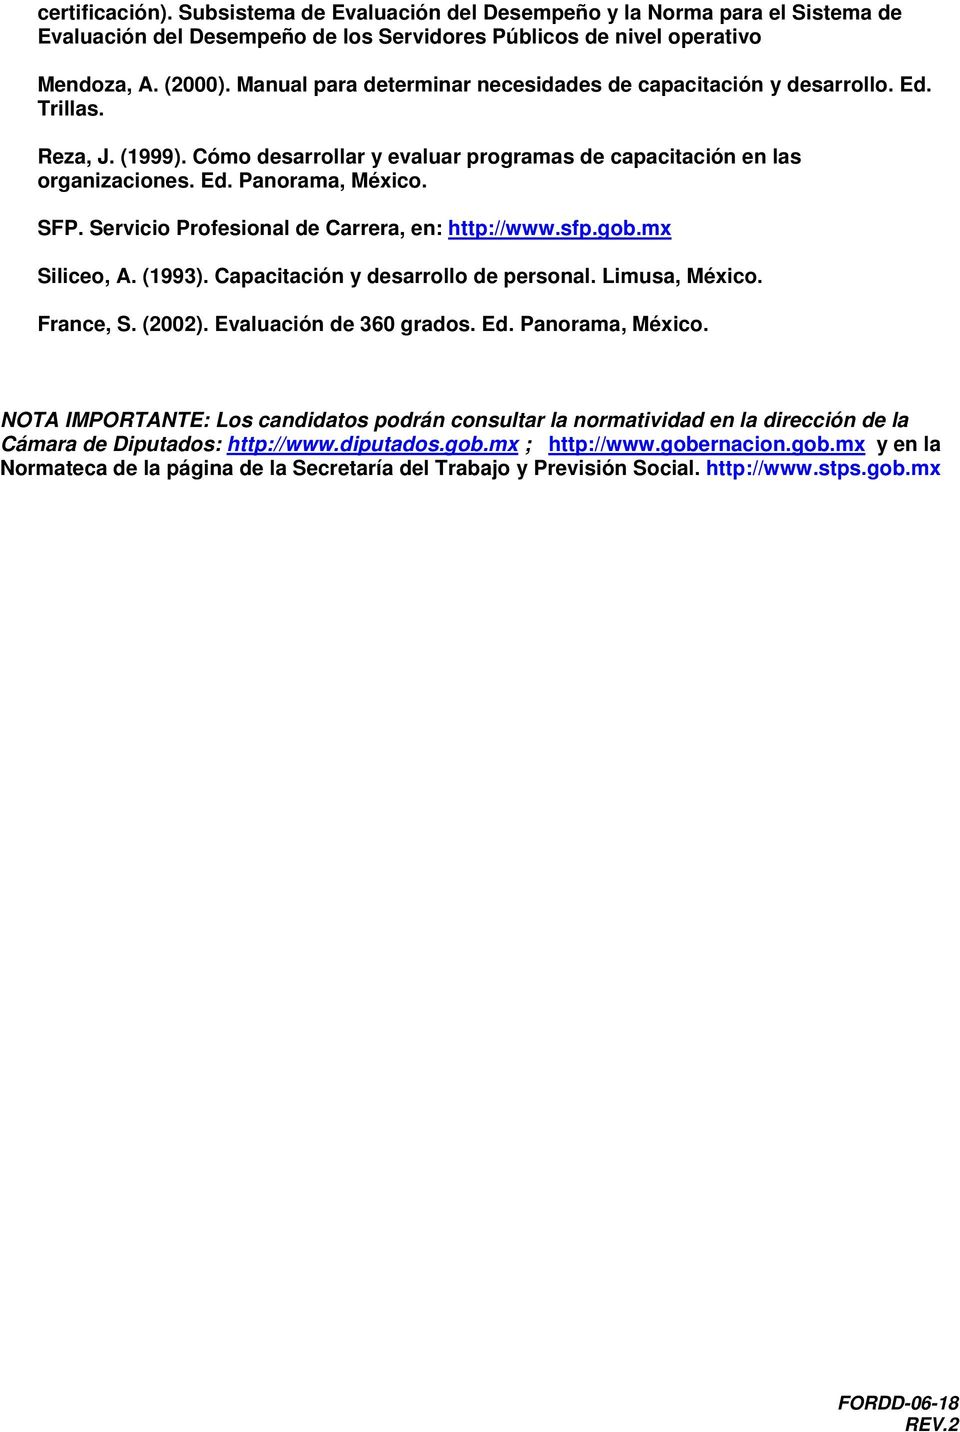 Servicio Profesional de Carrera, en: http://www.sfp.gob.mx Siliceo, A. (1993). Capacitación y desarrollo de personal. Limusa, México. France, S. (2002). Evaluación de 360 grados. Ed. Panorama, México.